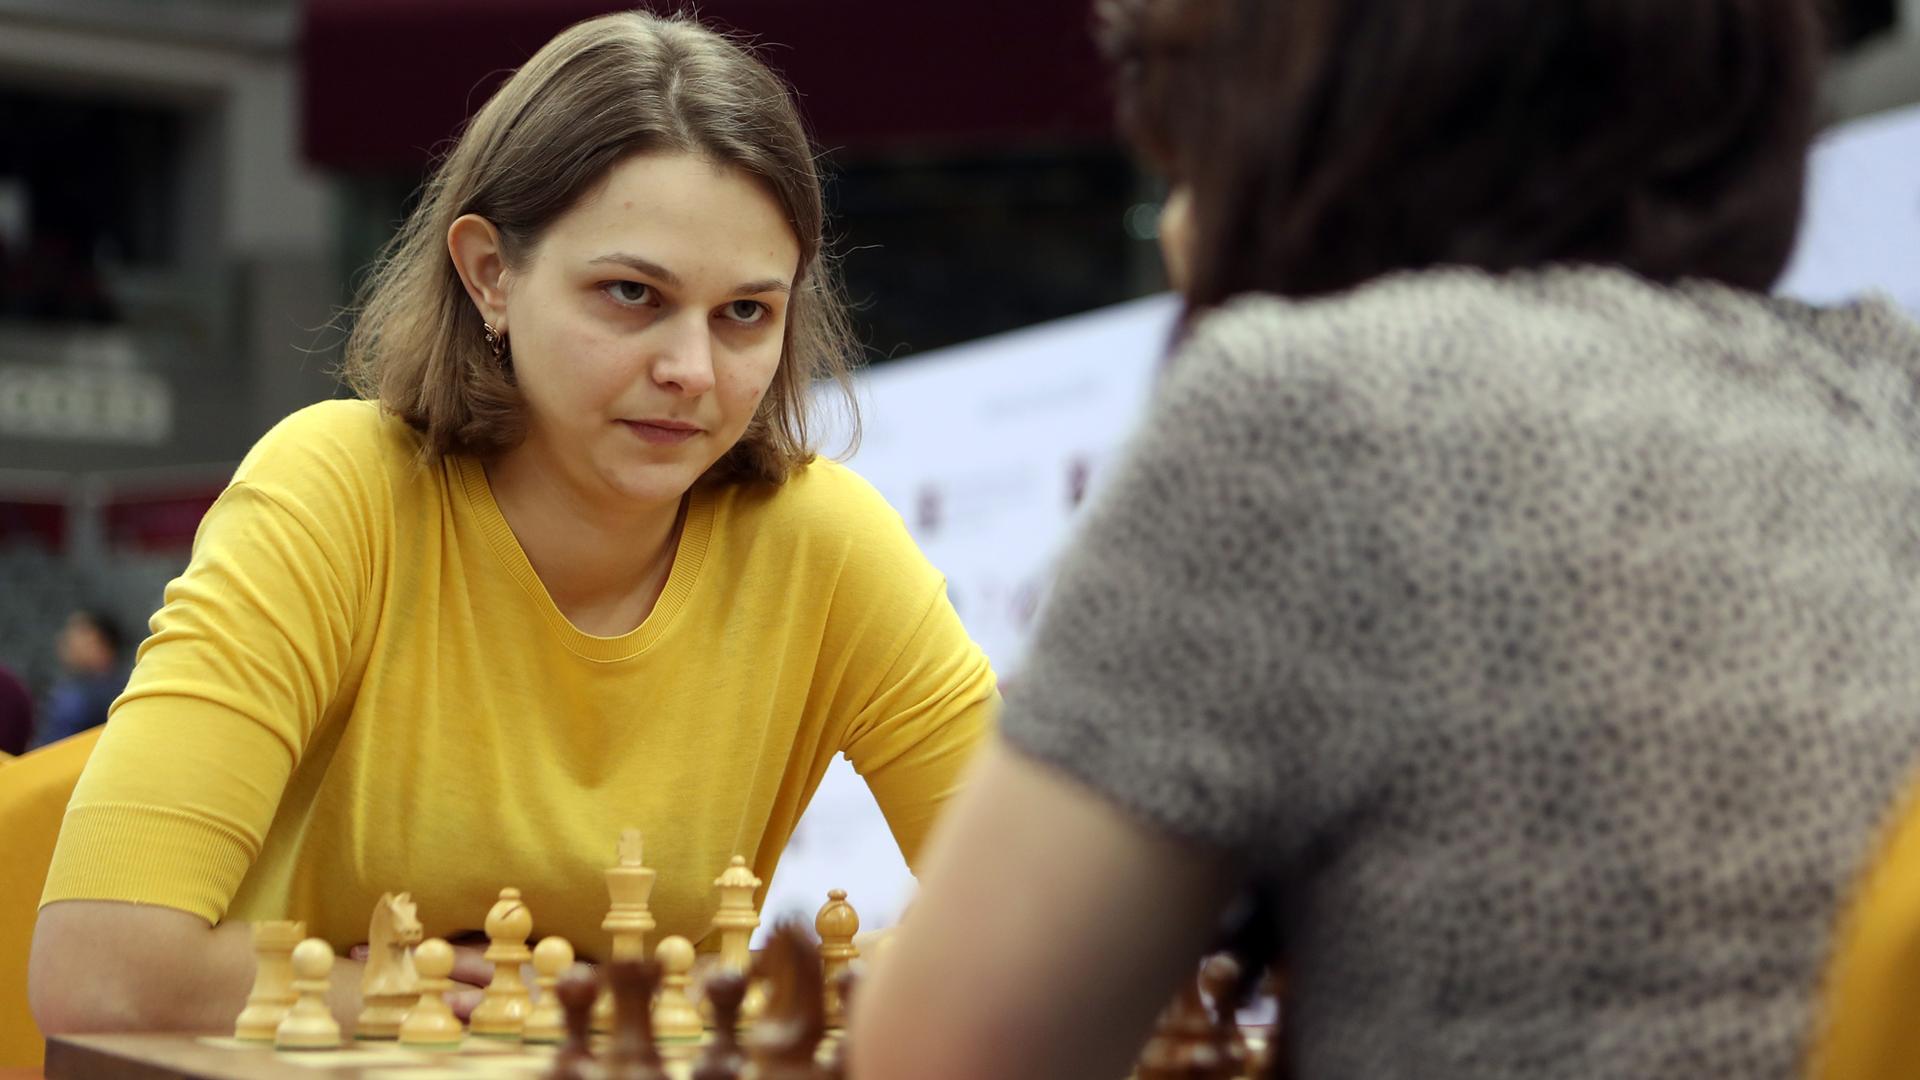 Ukraine's grandmaster Anna Muzychuk, wearing a yellow shirt, stares down her opponent across a chess board.